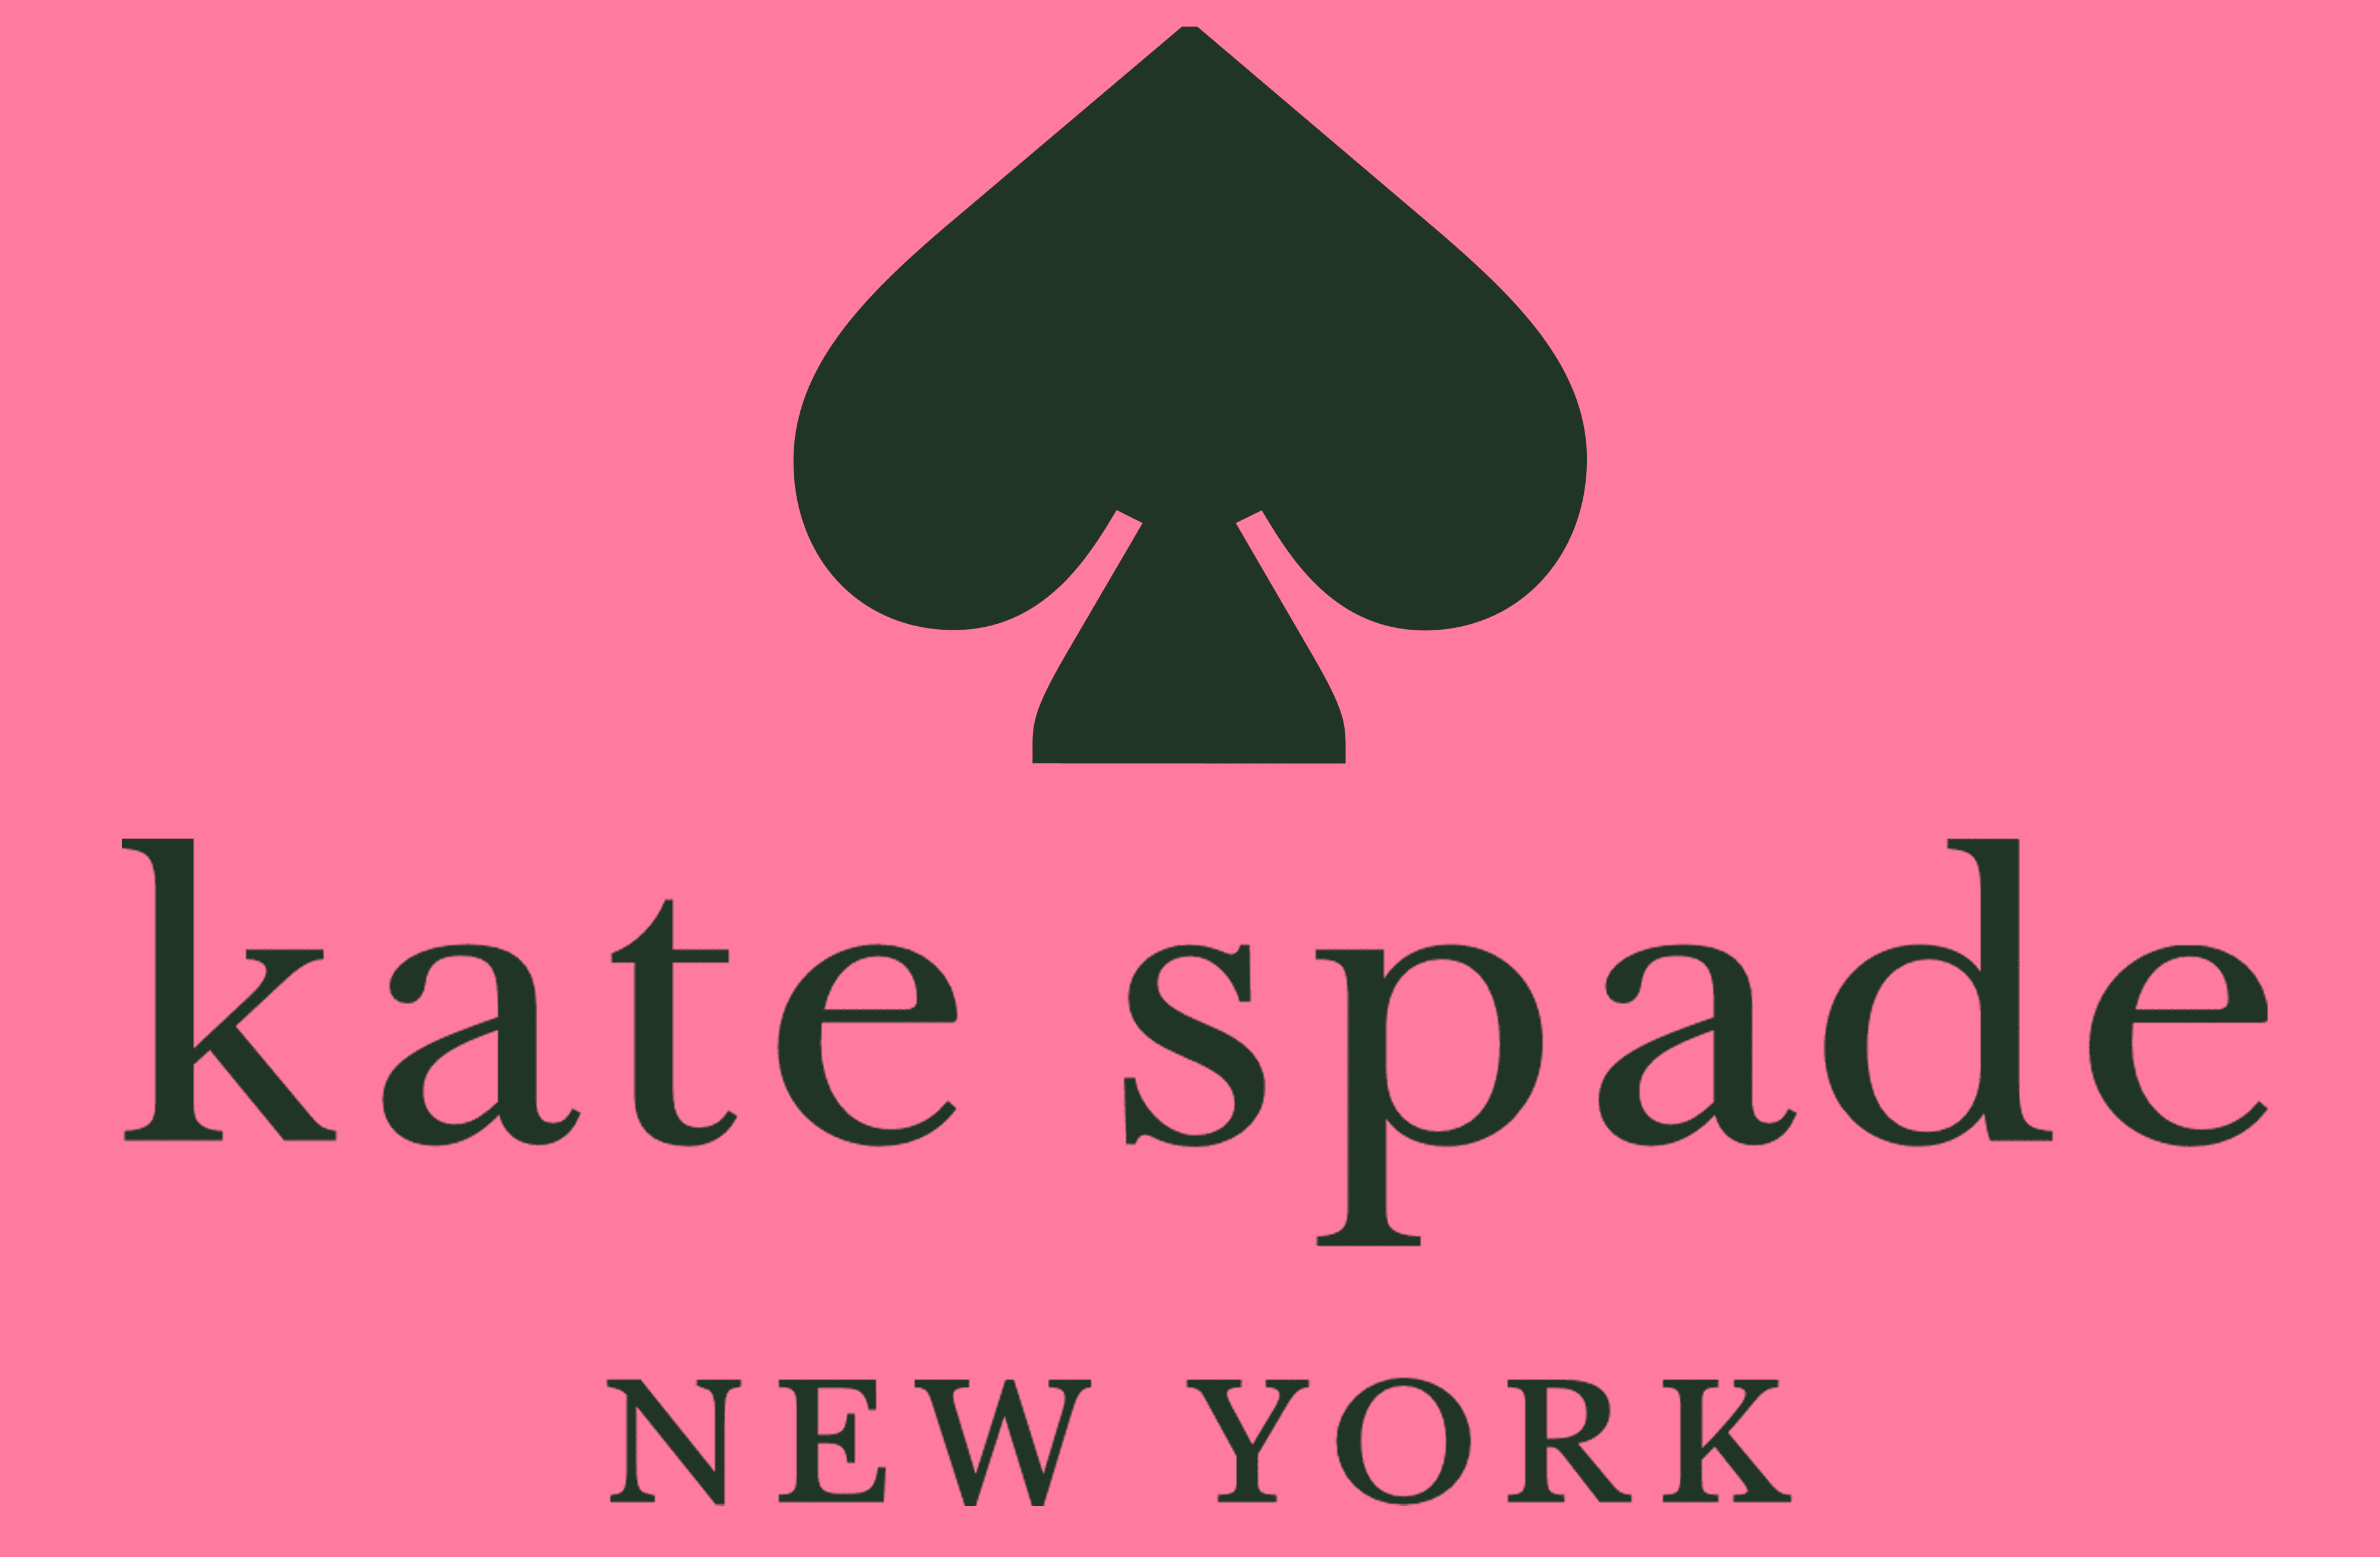 Kate Spade New York - Wikipedia